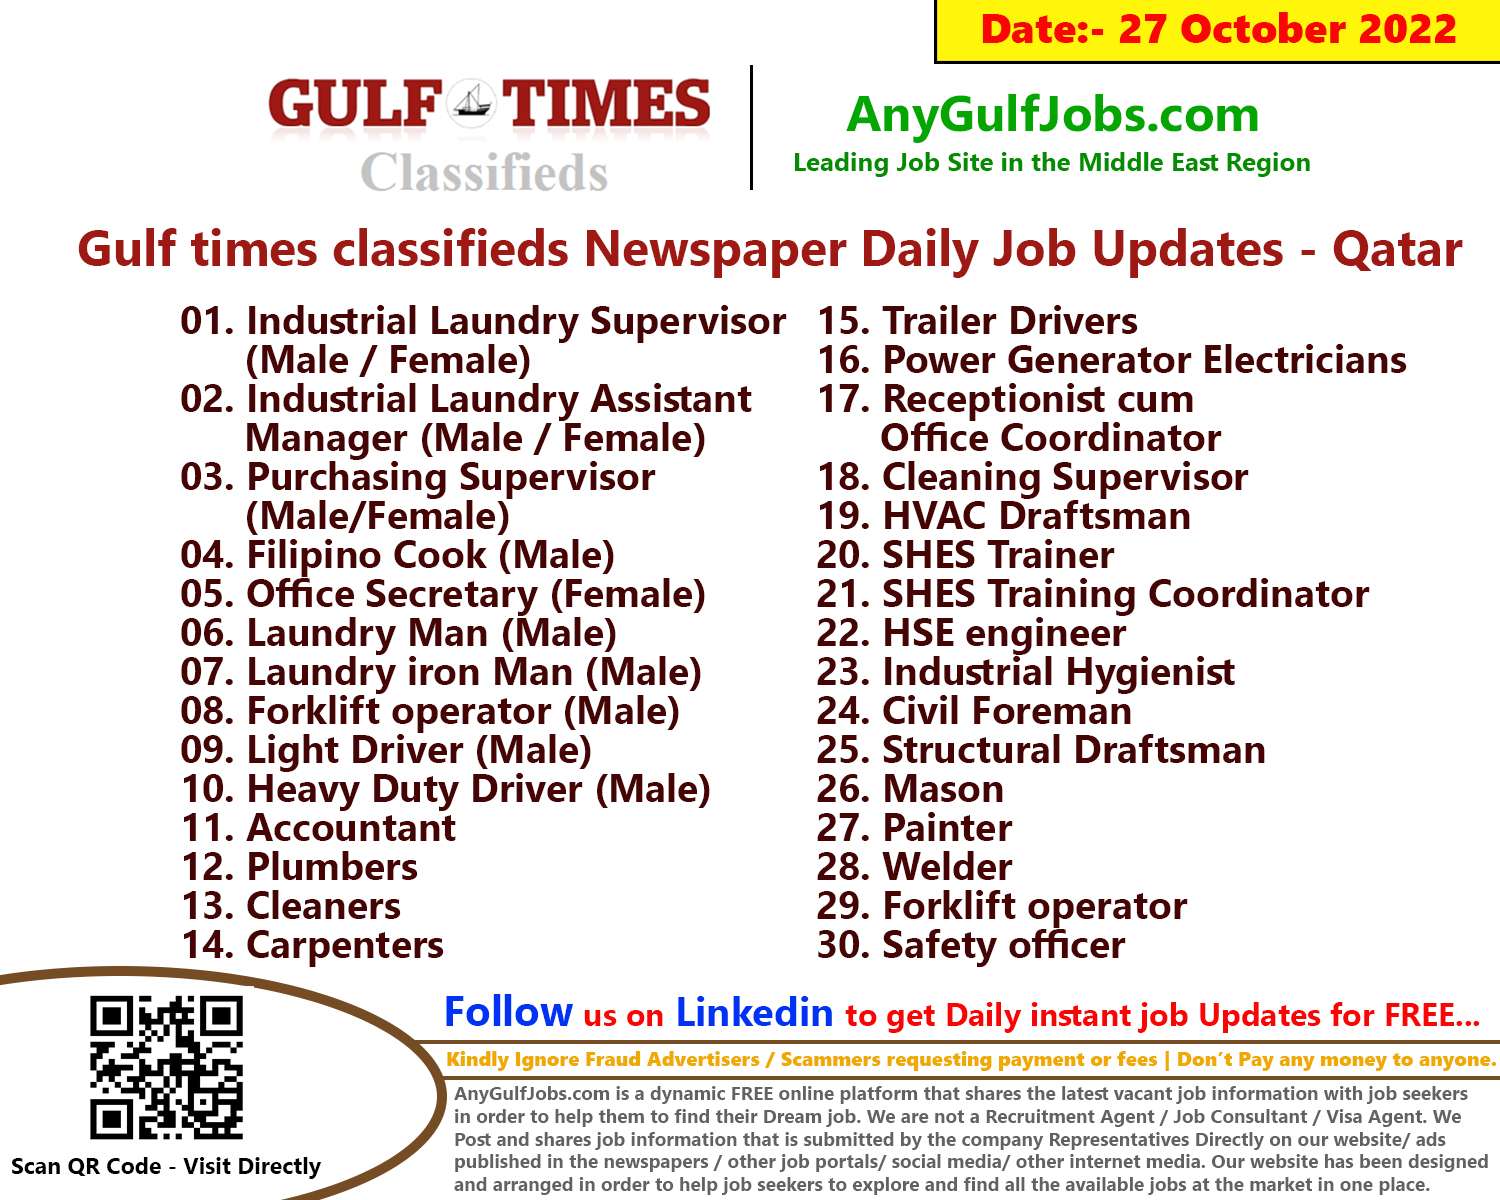 Gulf times classifieds Job Vacancies Qatar - 27 October 2022